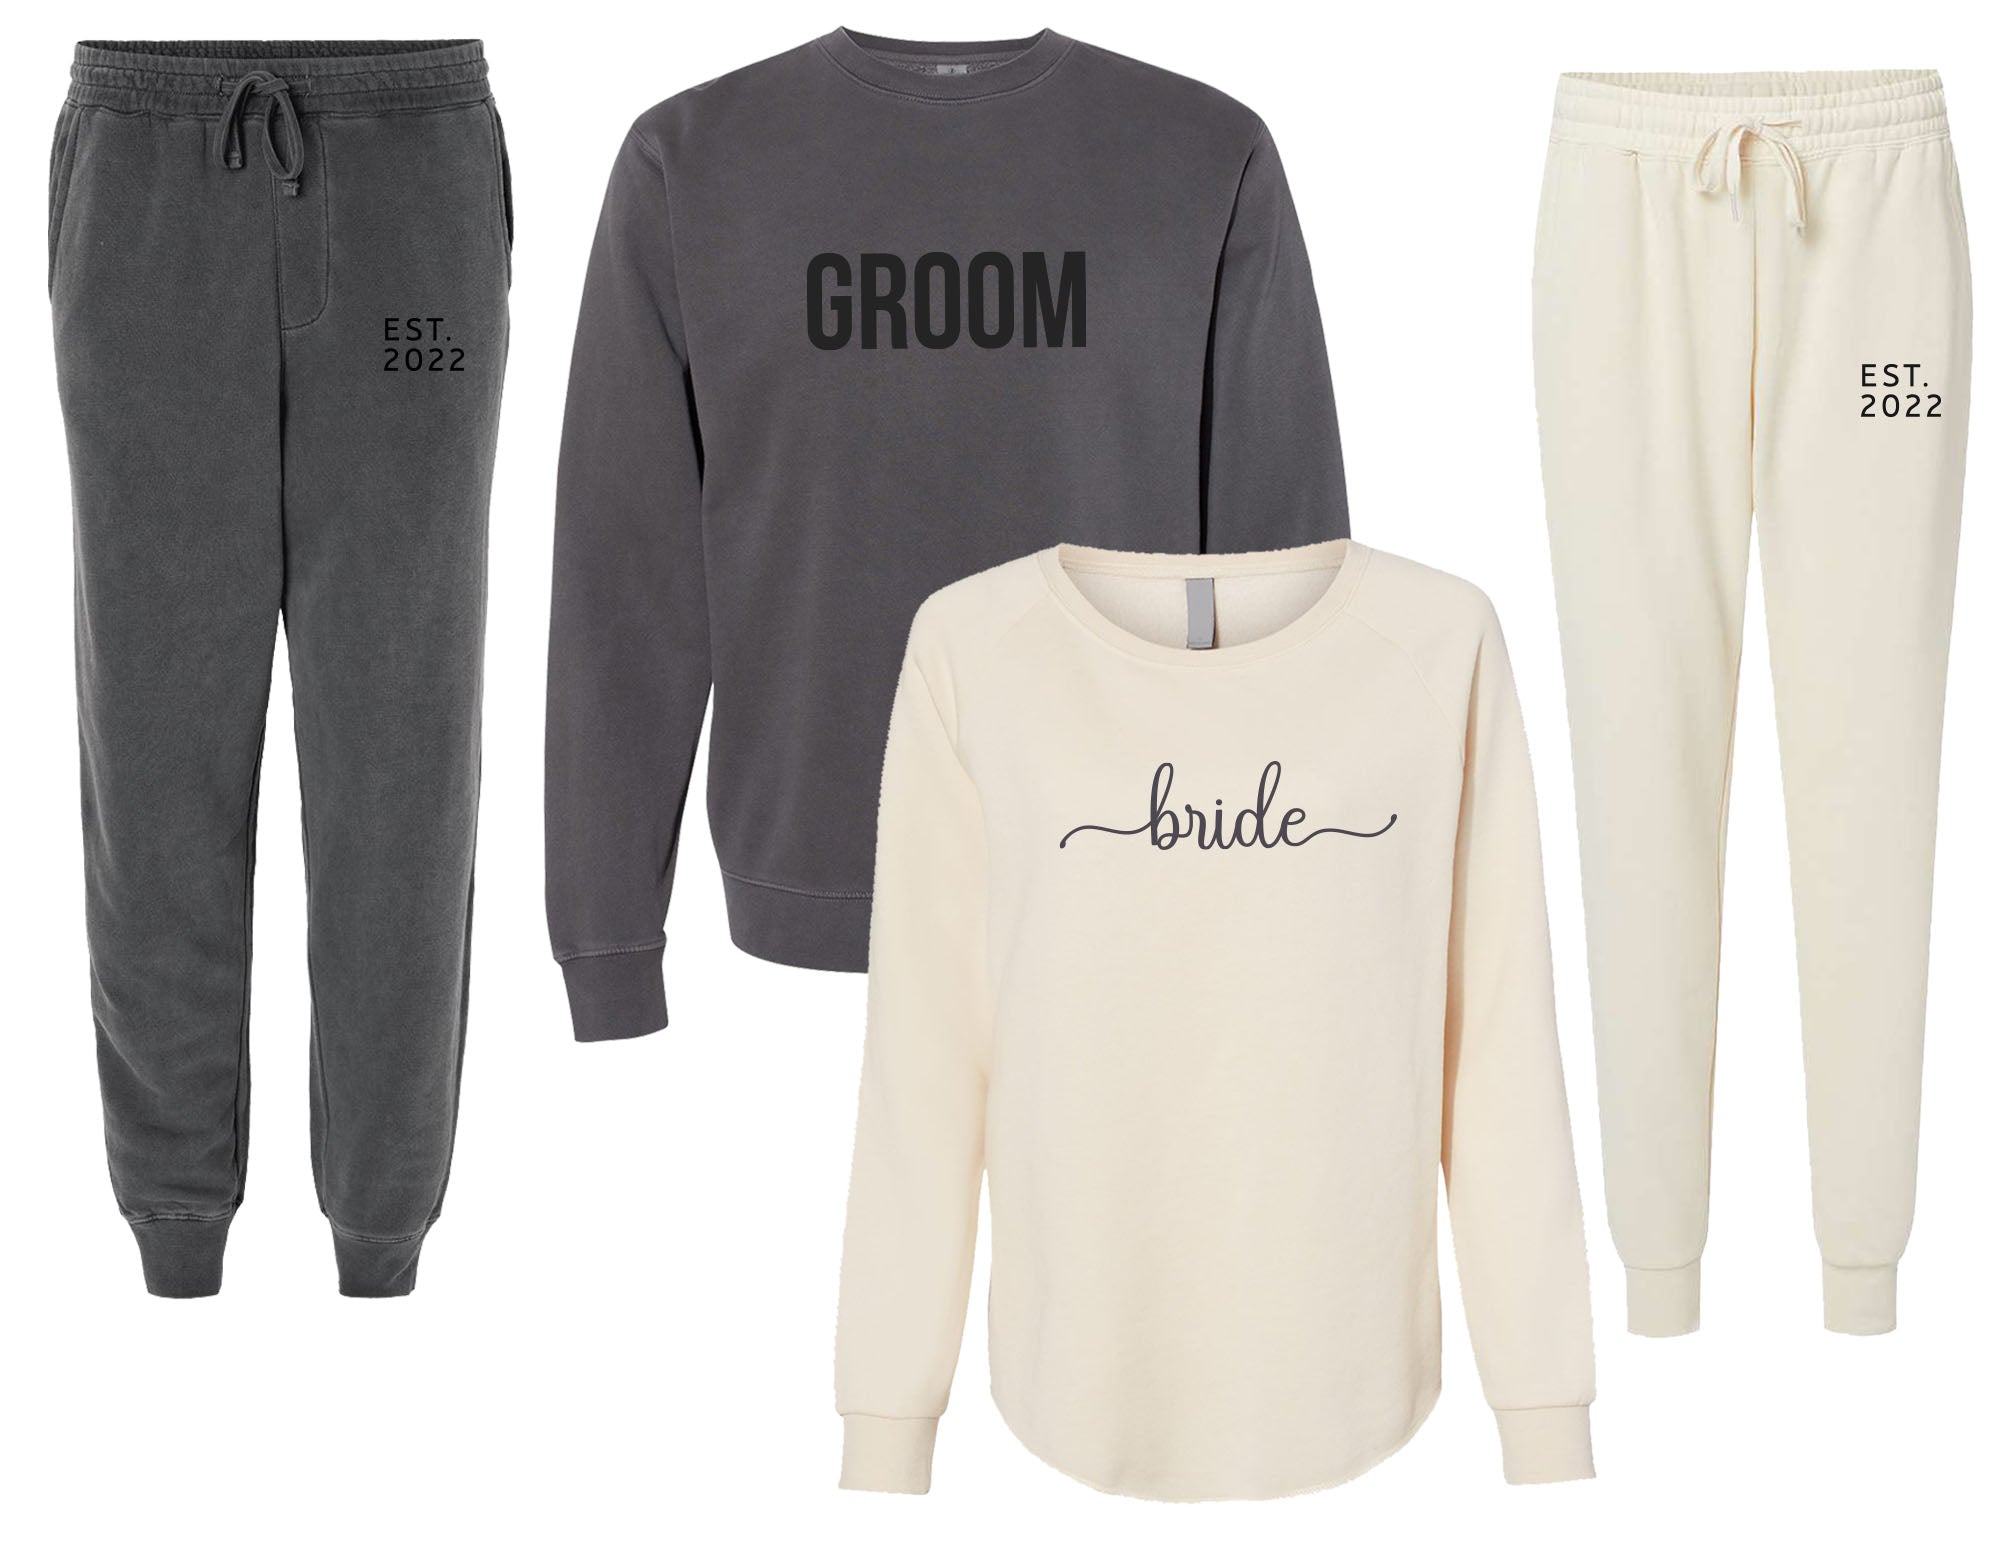 Groom & Bride custom Couple Matching Outfit - Sweatshirt